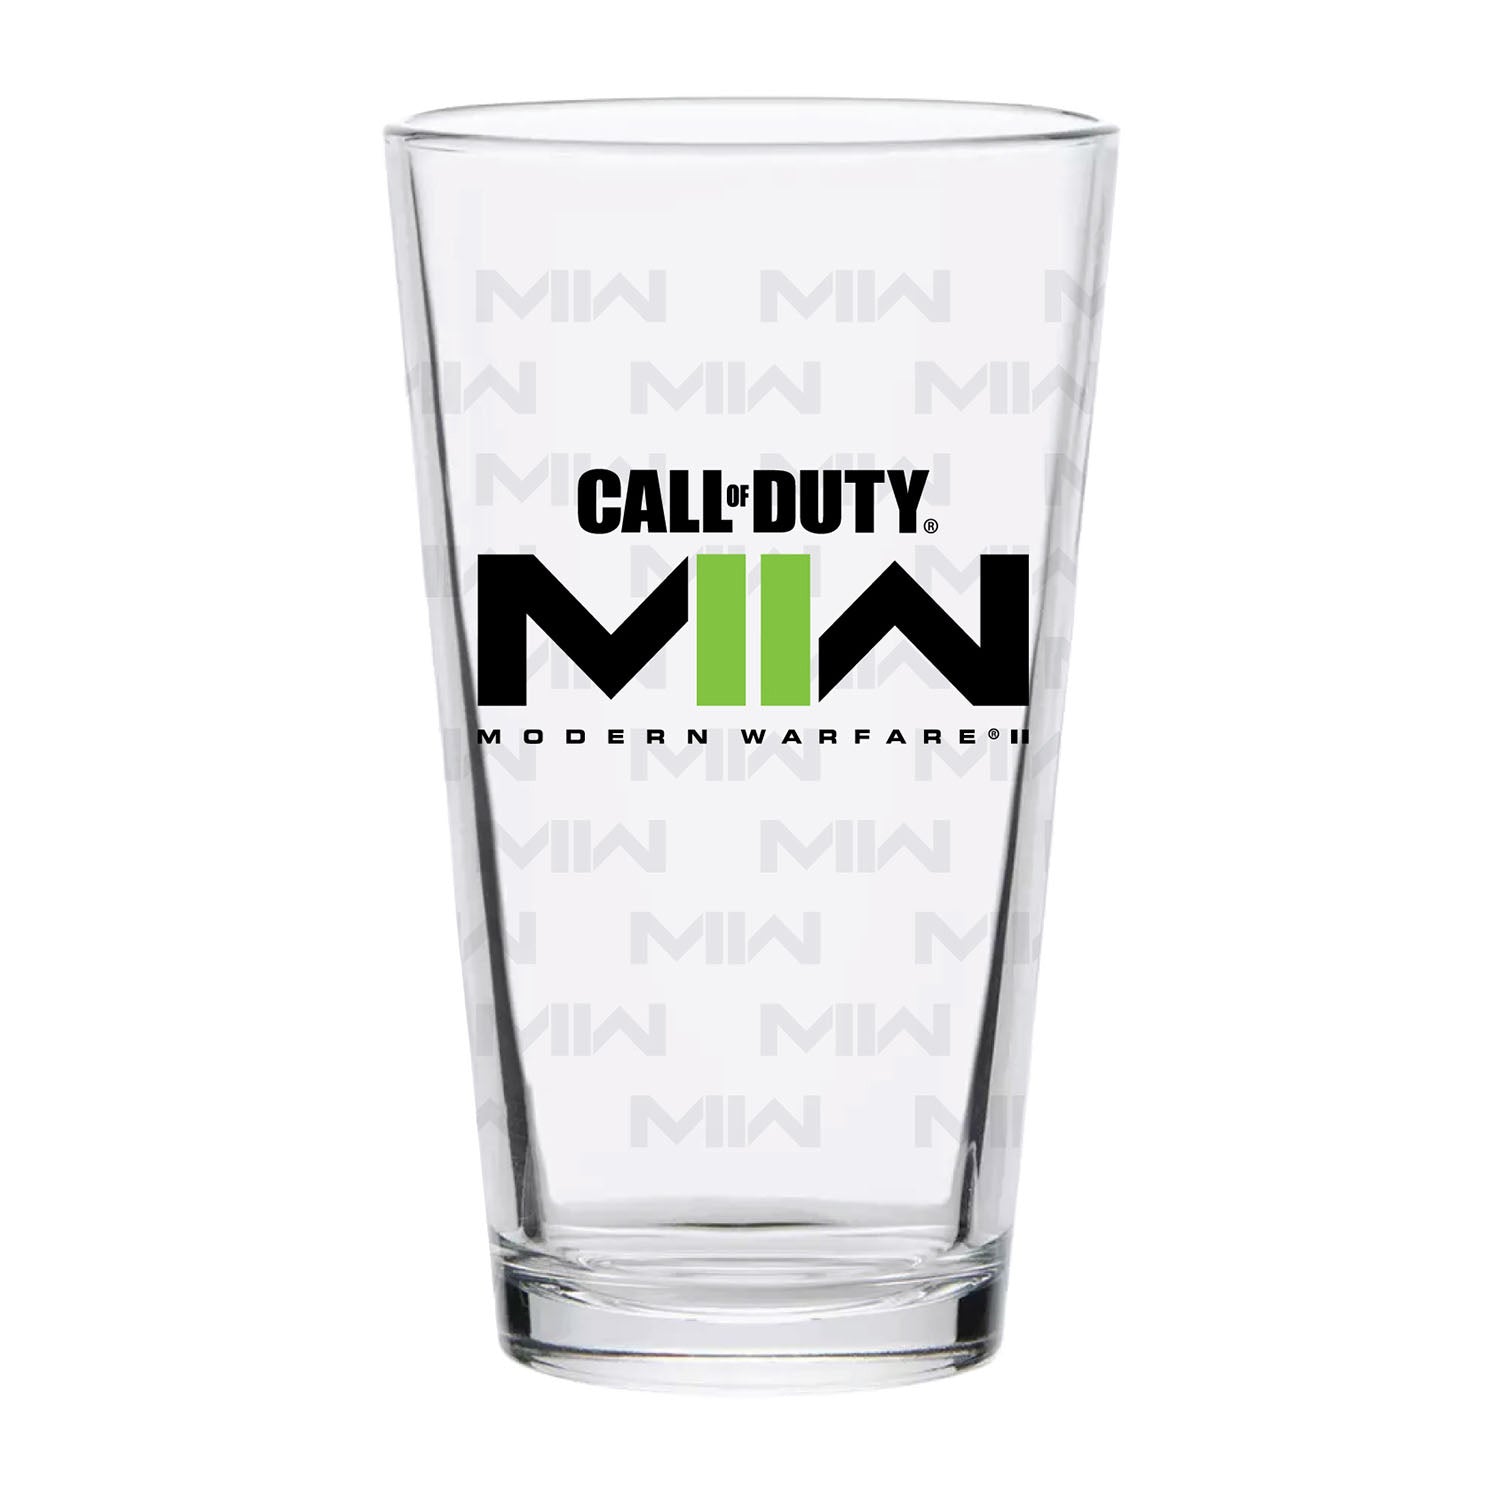 Call of Duty Modern Warfare 2 16oz Pint Glass - Front View